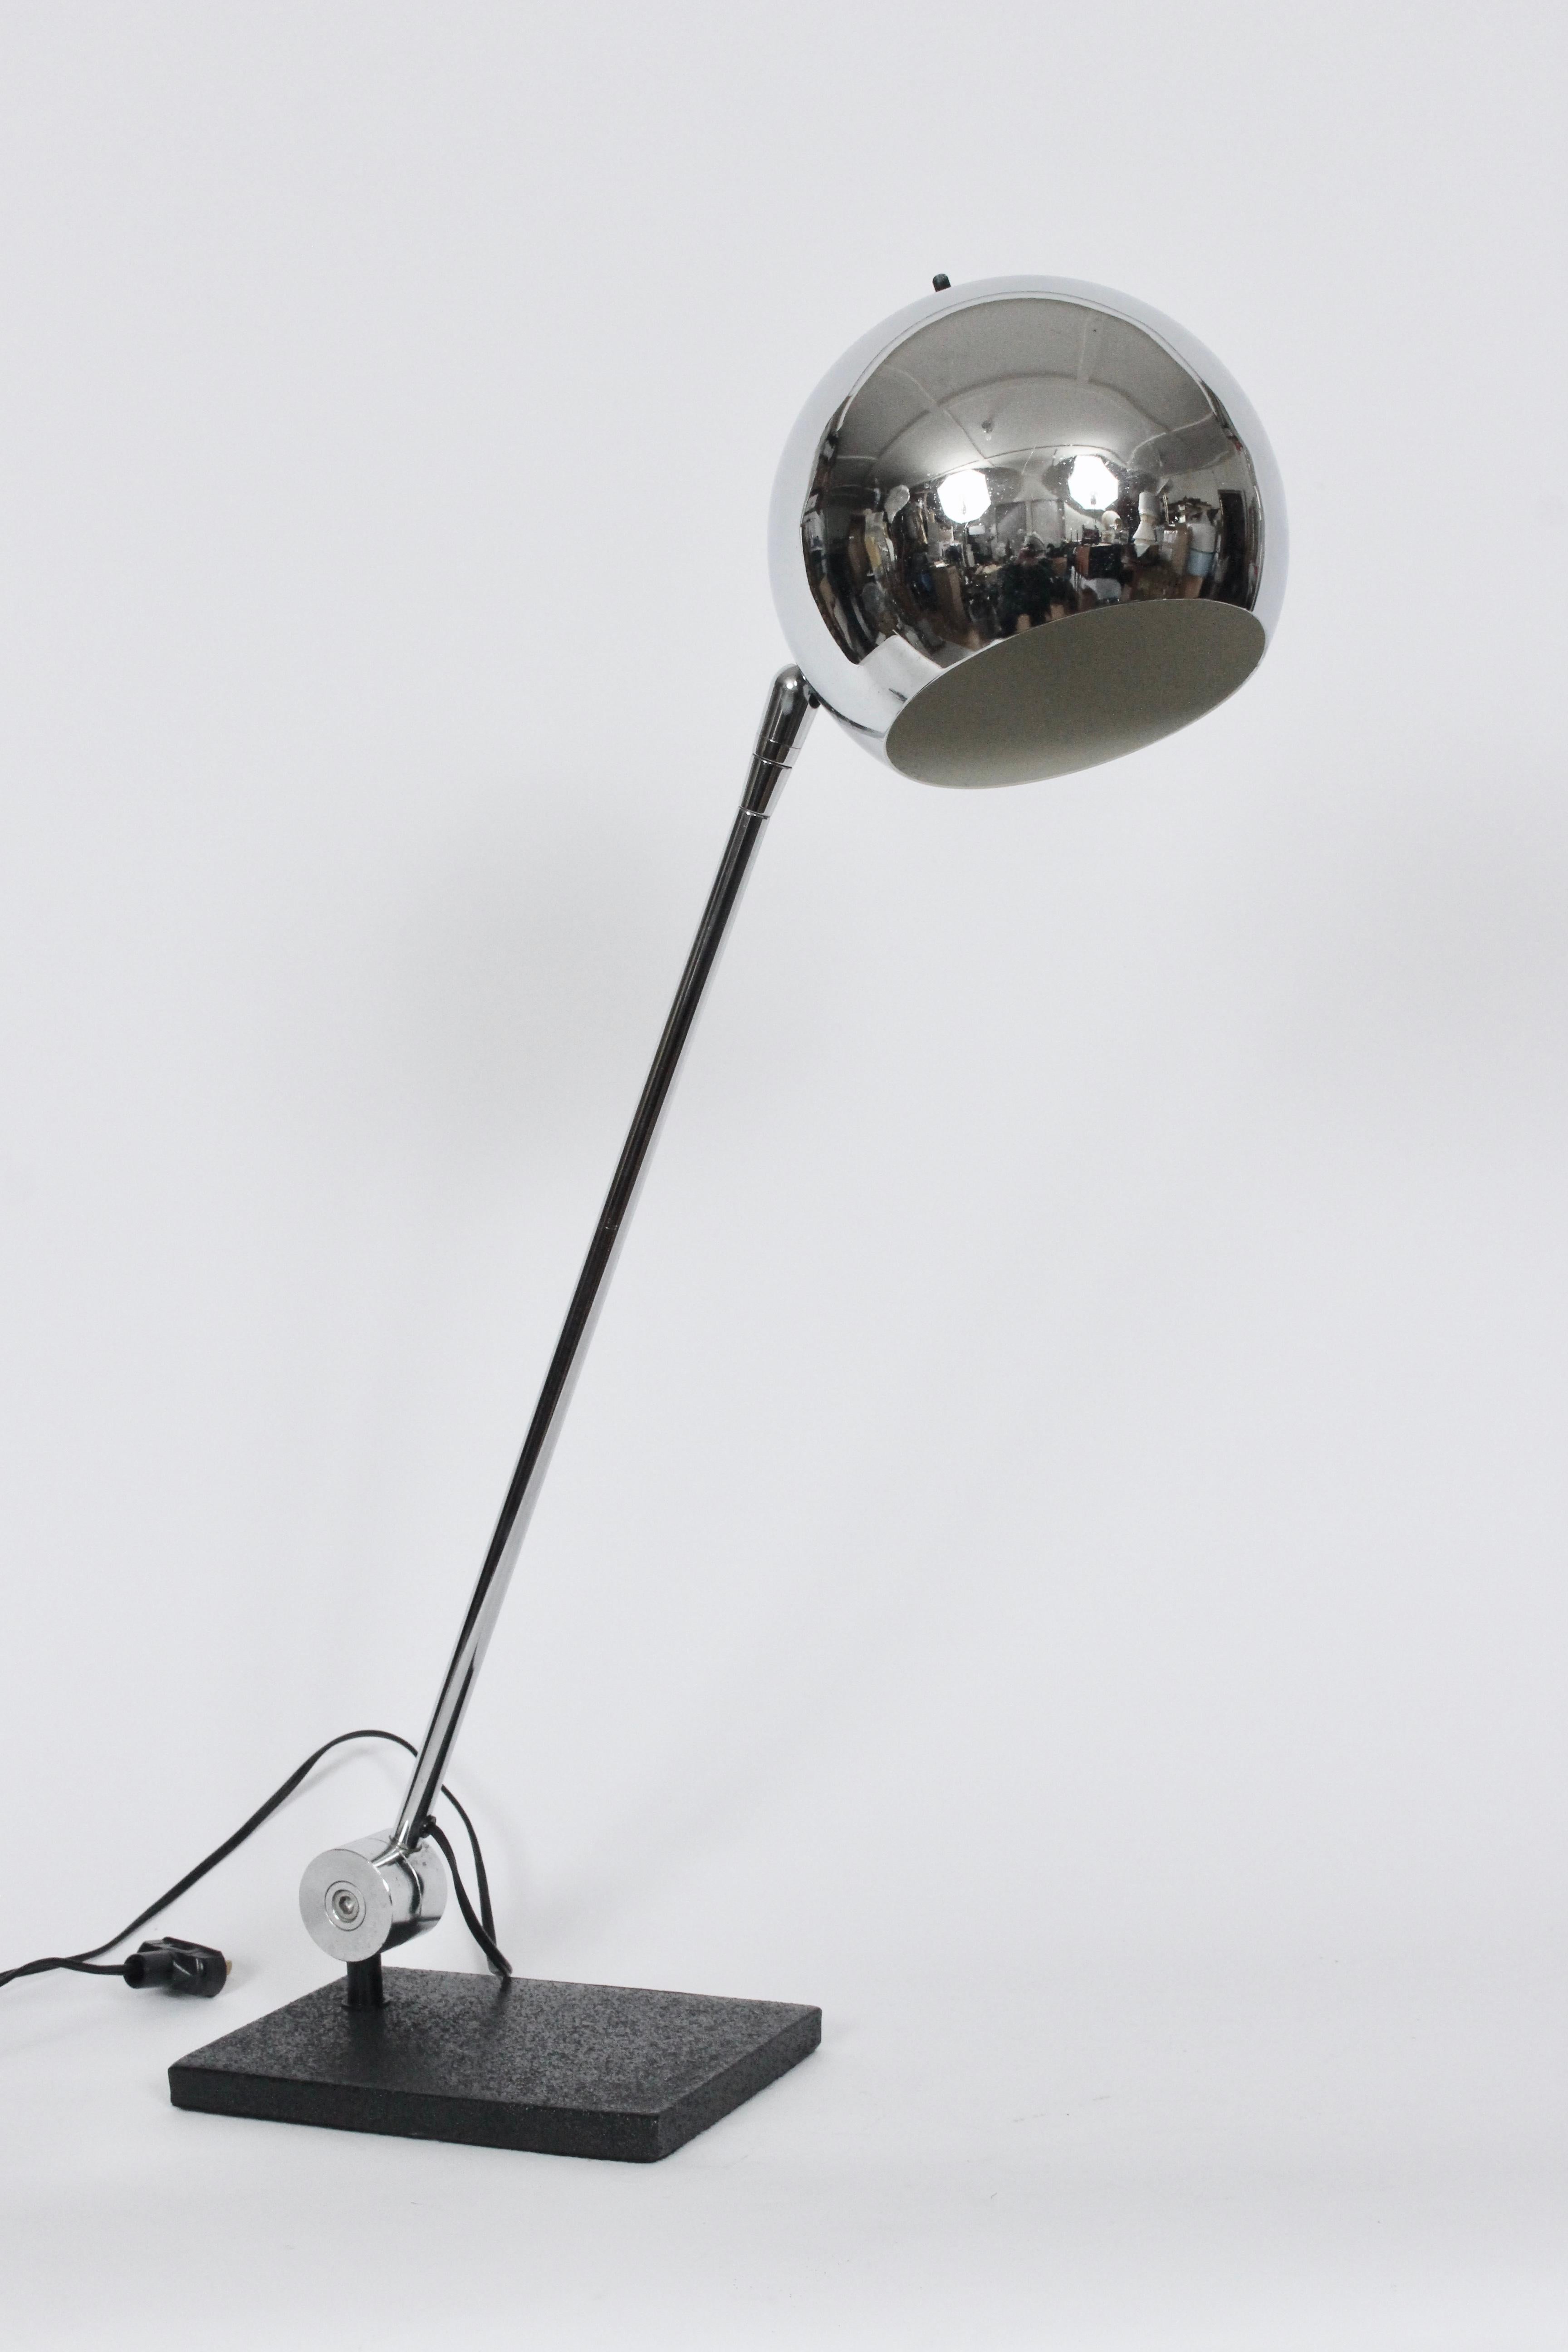 Modern Robert Sonneman adjustable chrome globe desk lamp, Circa 1970. Featuring a heavy Black enameled rectangular base (5.5 x 8) with reflective, vented, articulating (7D) chrome ball shade and off white enameled interior. Standard socket. Turn